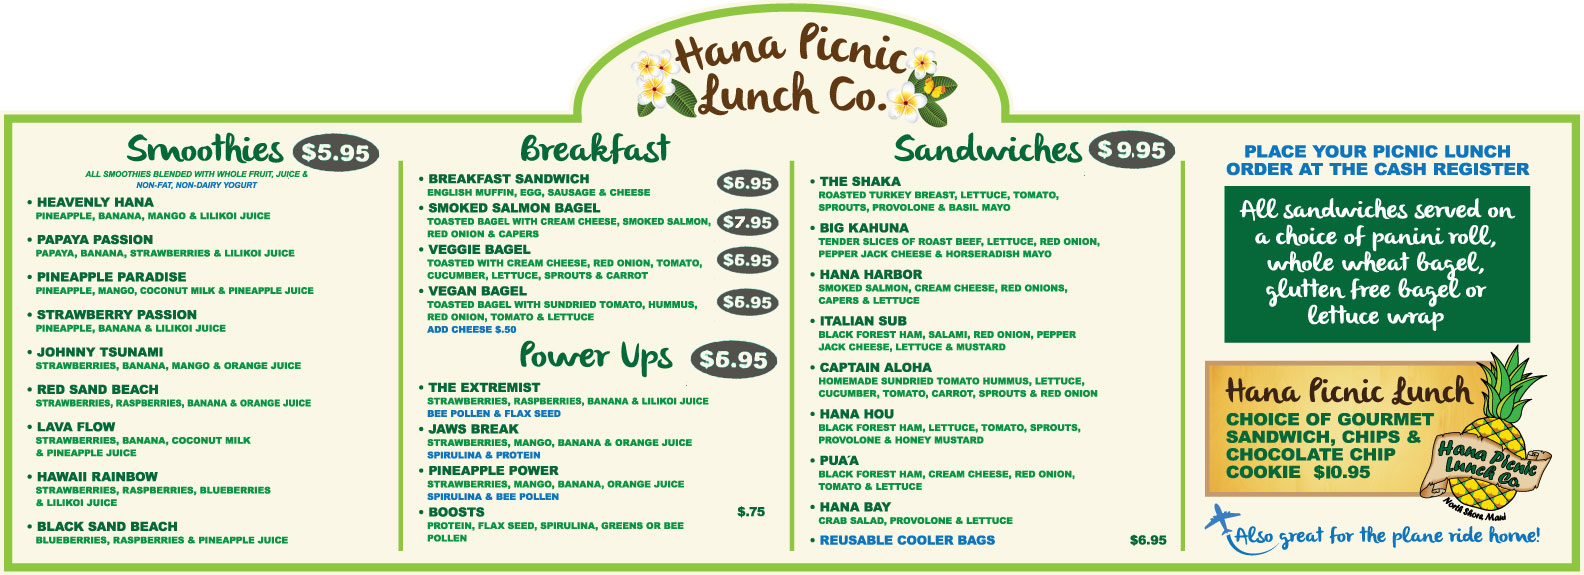 Hana Picnic Lunch Company Menu